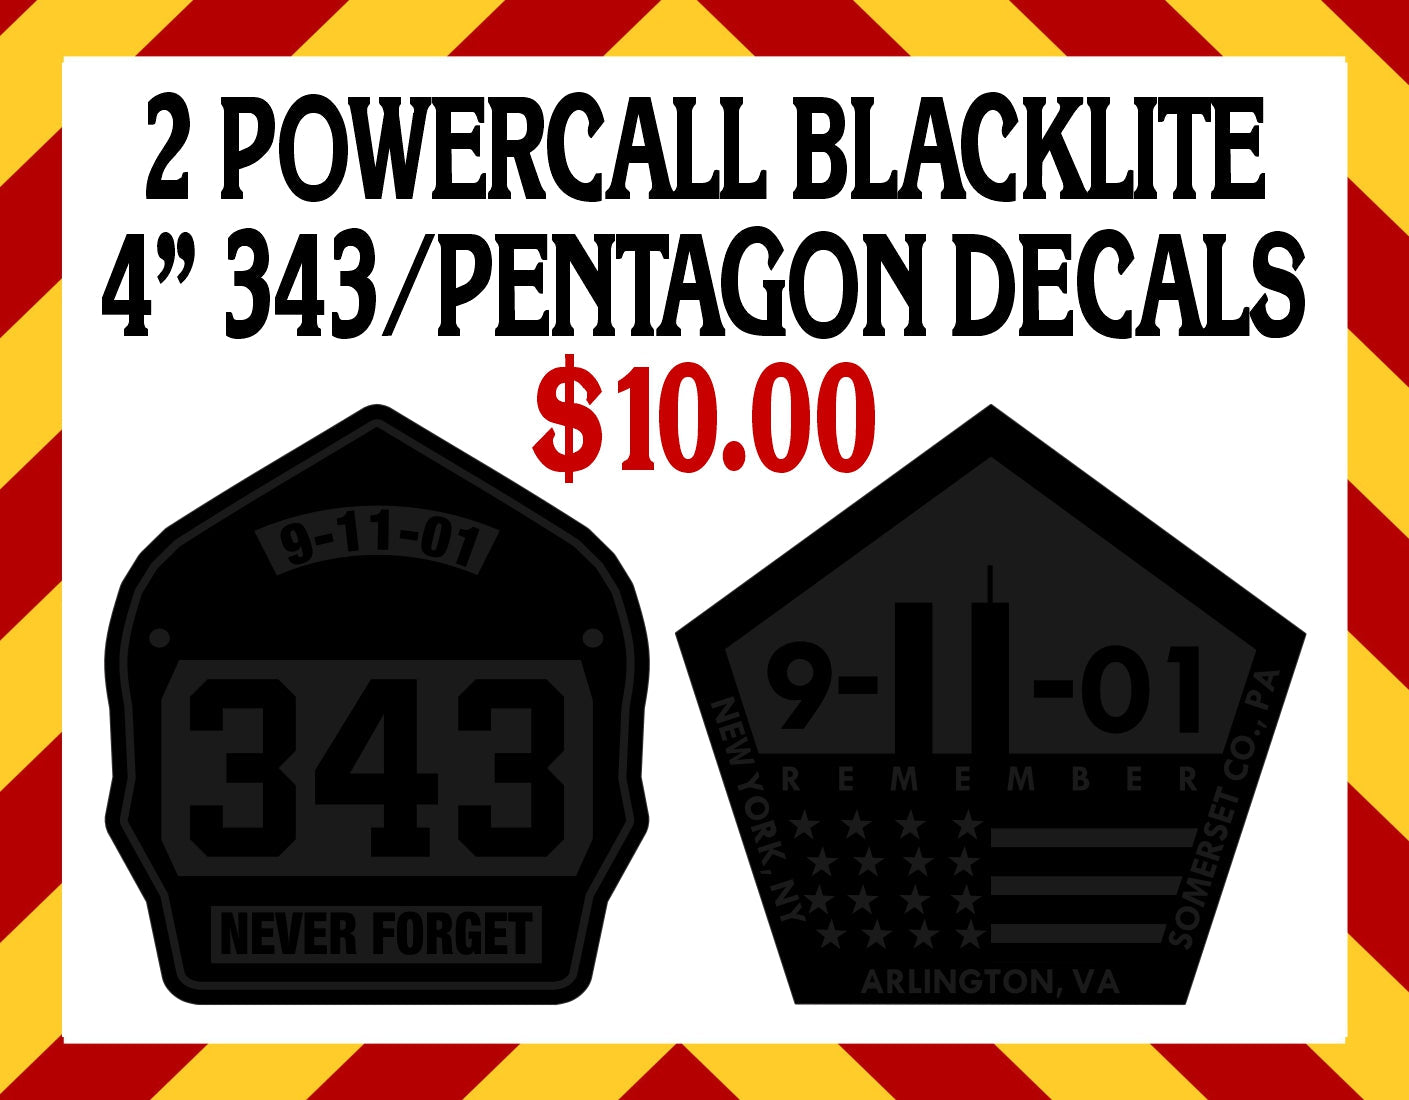 Window Decals - Pentagon and 343 Blacklite 4" Decal Pair